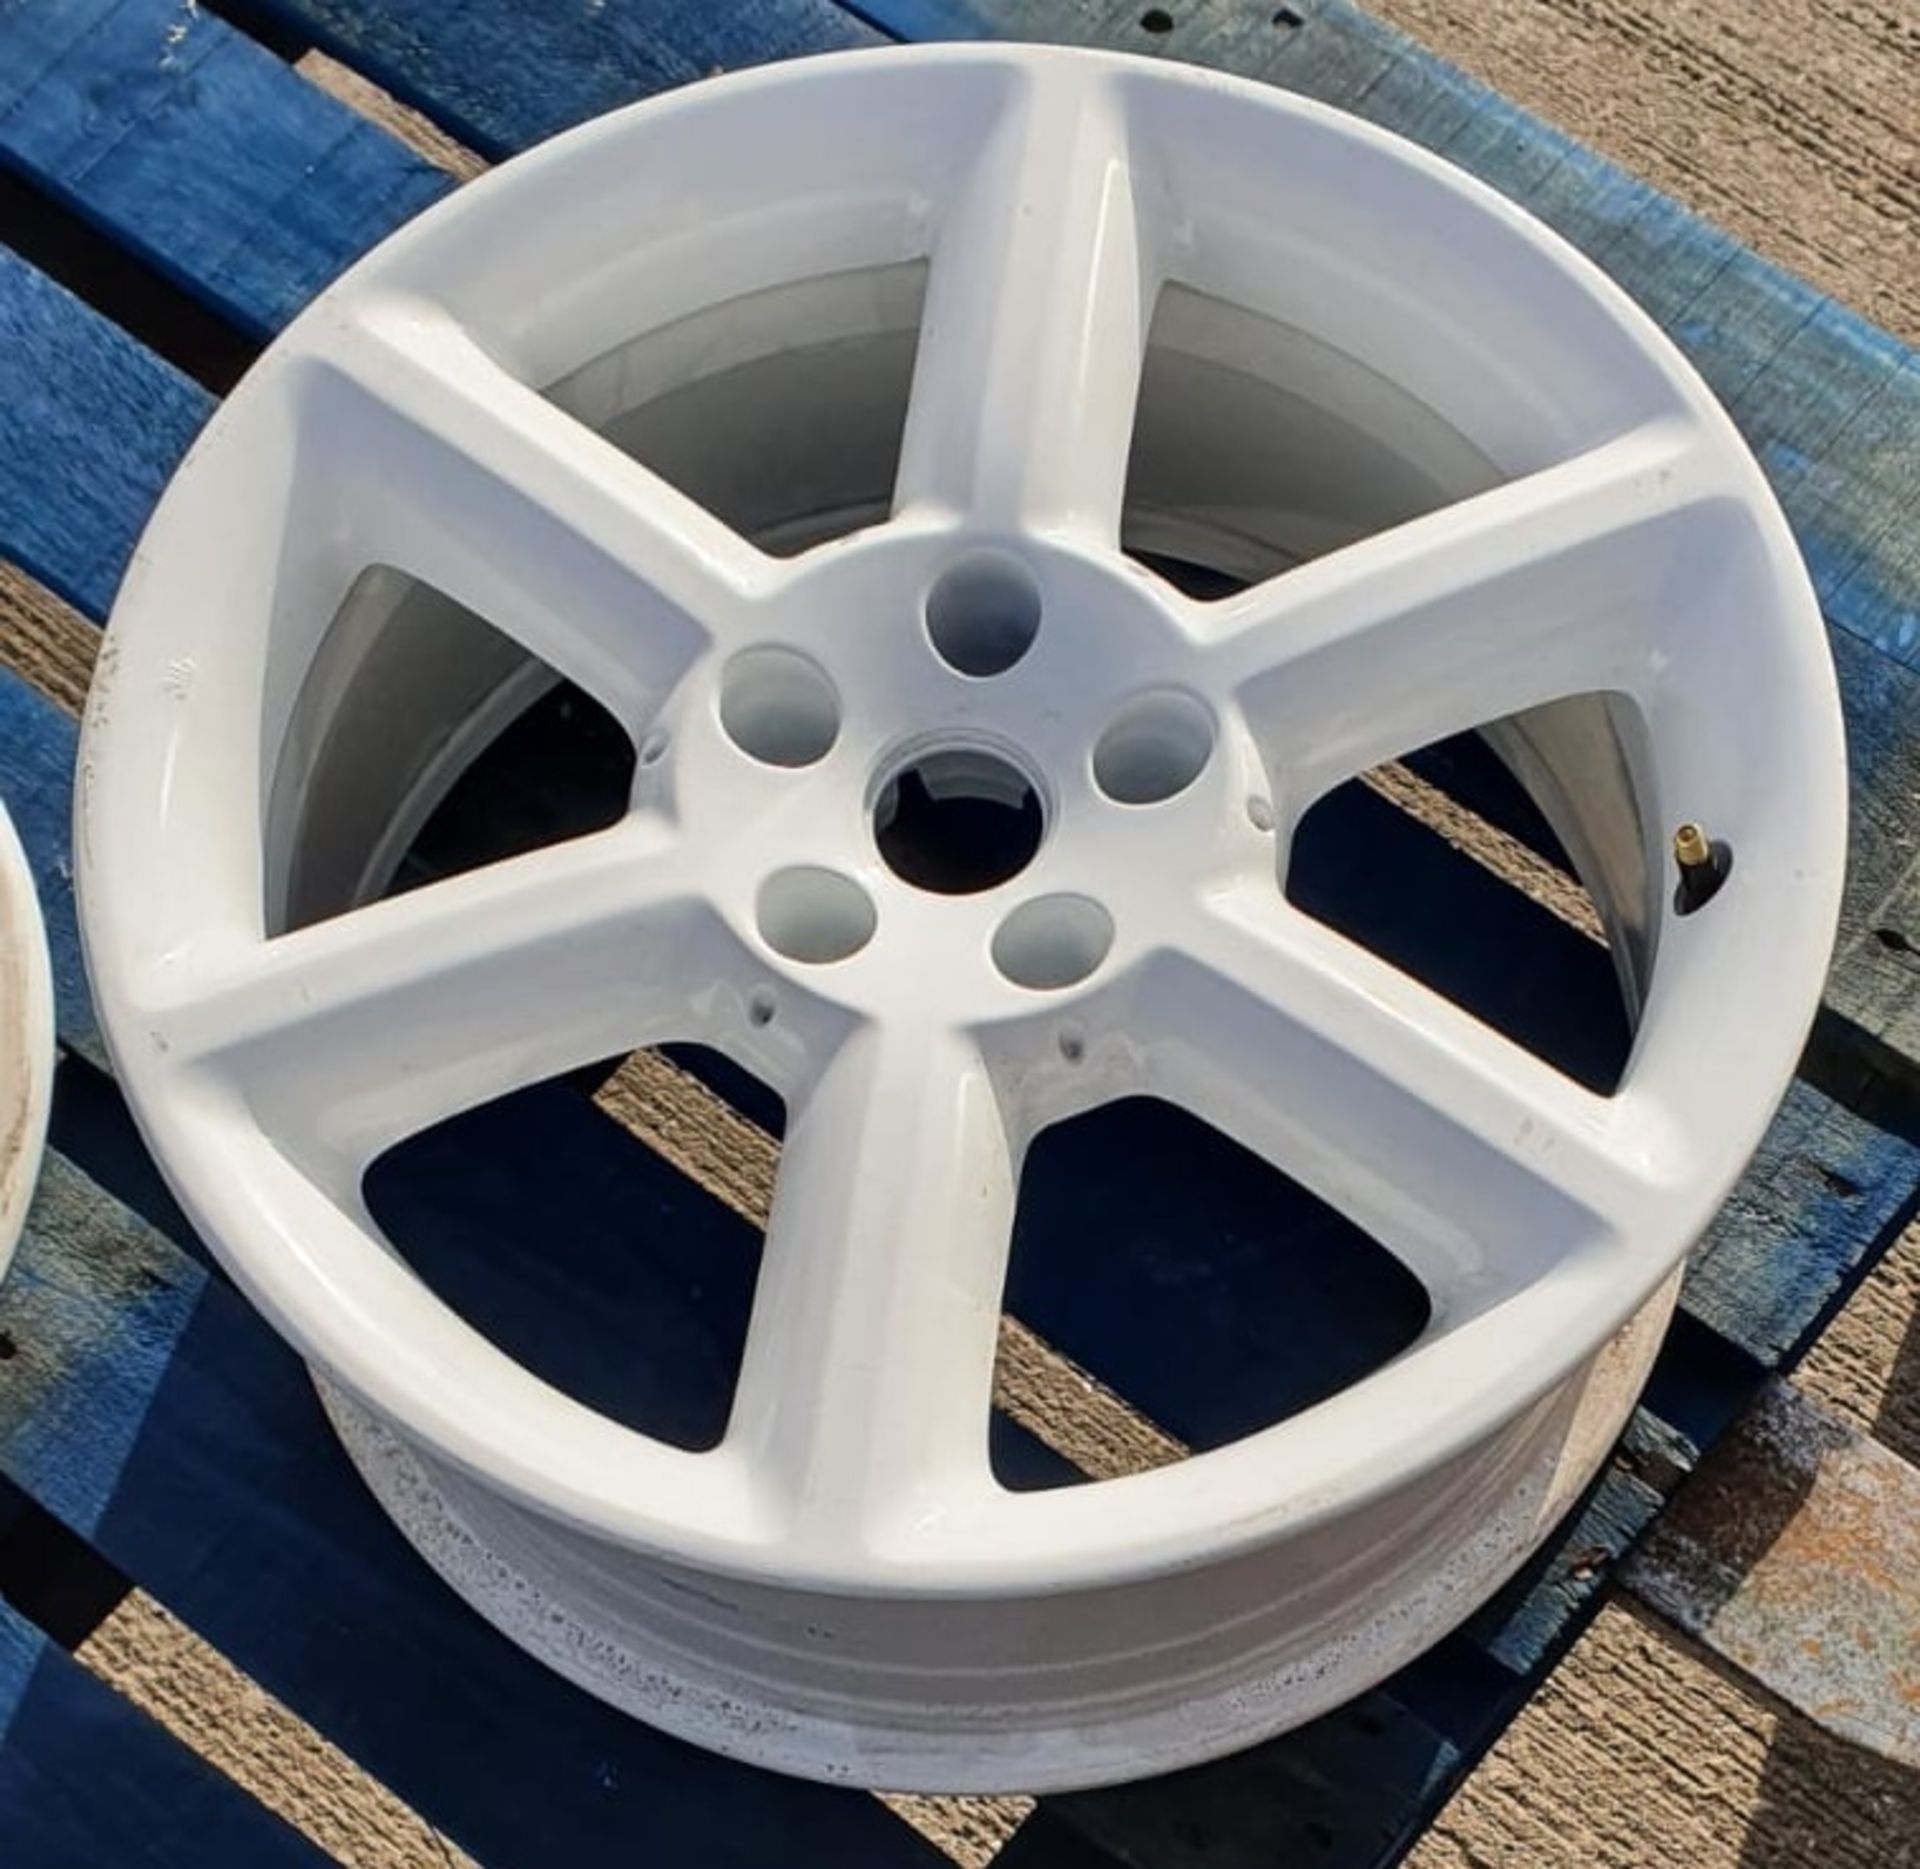 2 x Powder Coated 6-Spoke Car Wheel In White - Unused Boxed Stock - Image 3 of 5